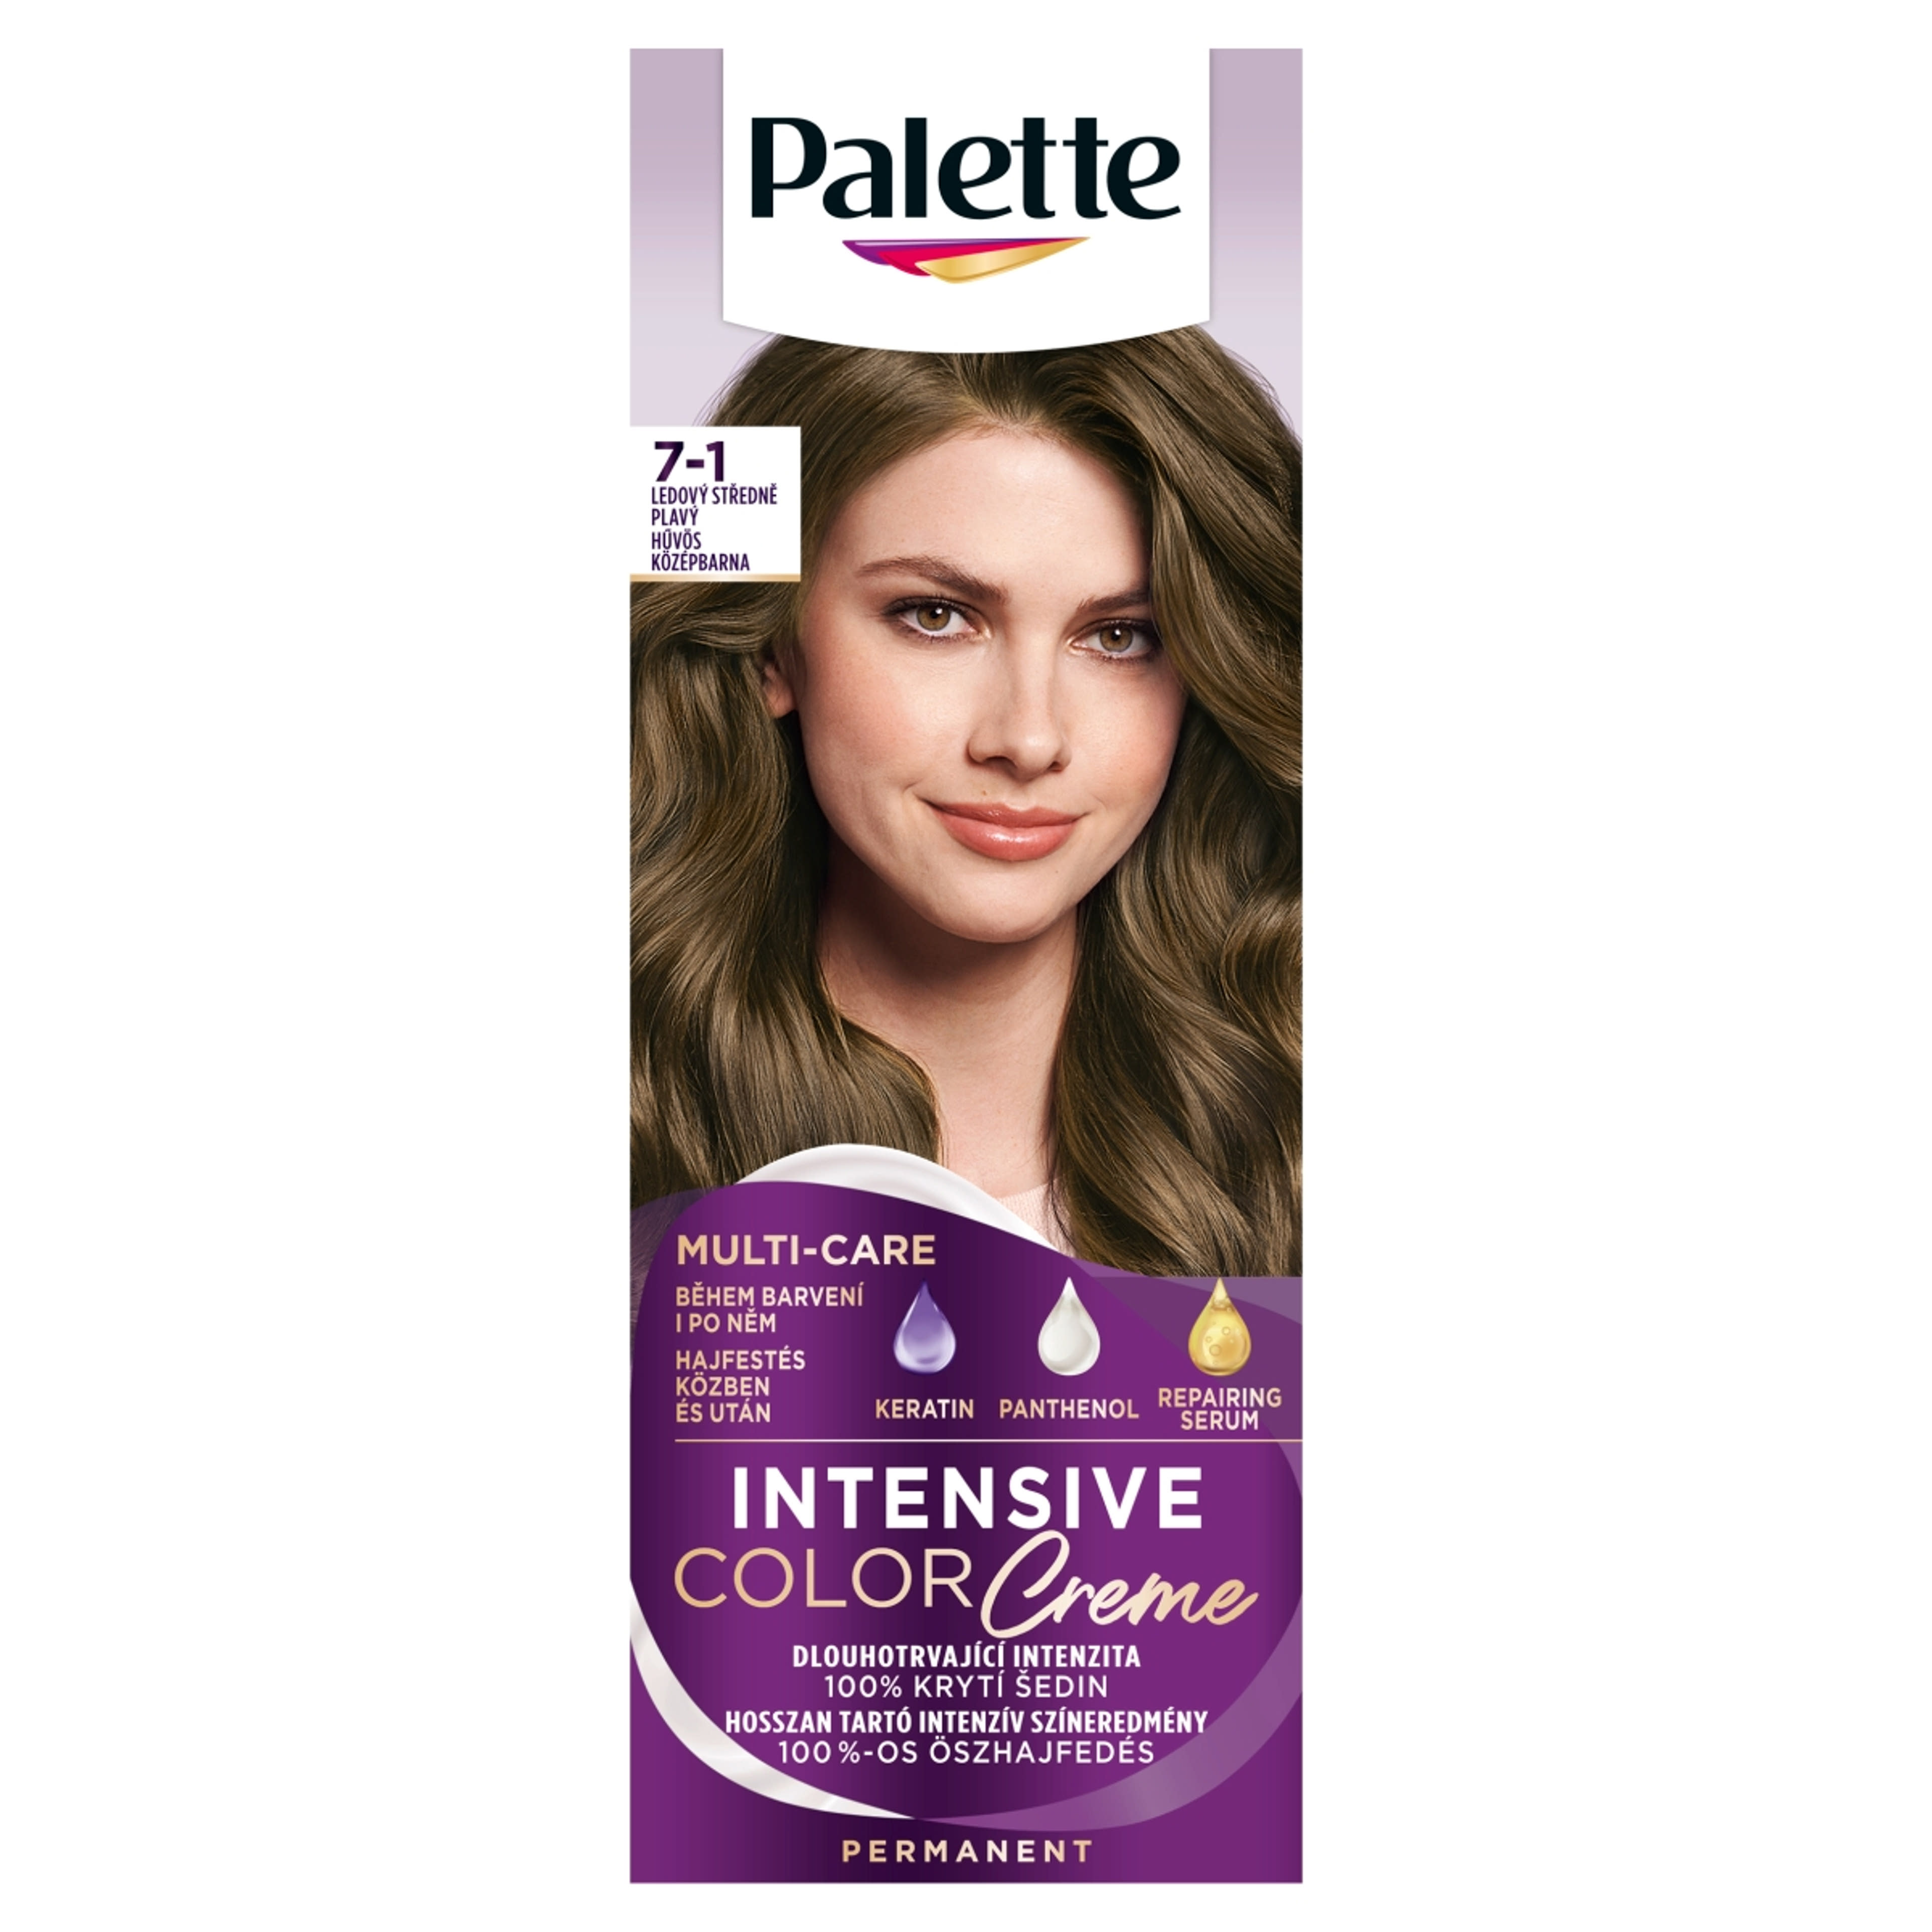 Palette Intensive Color Creme hajfesték 7-1 hamvas középbarna - 1 db